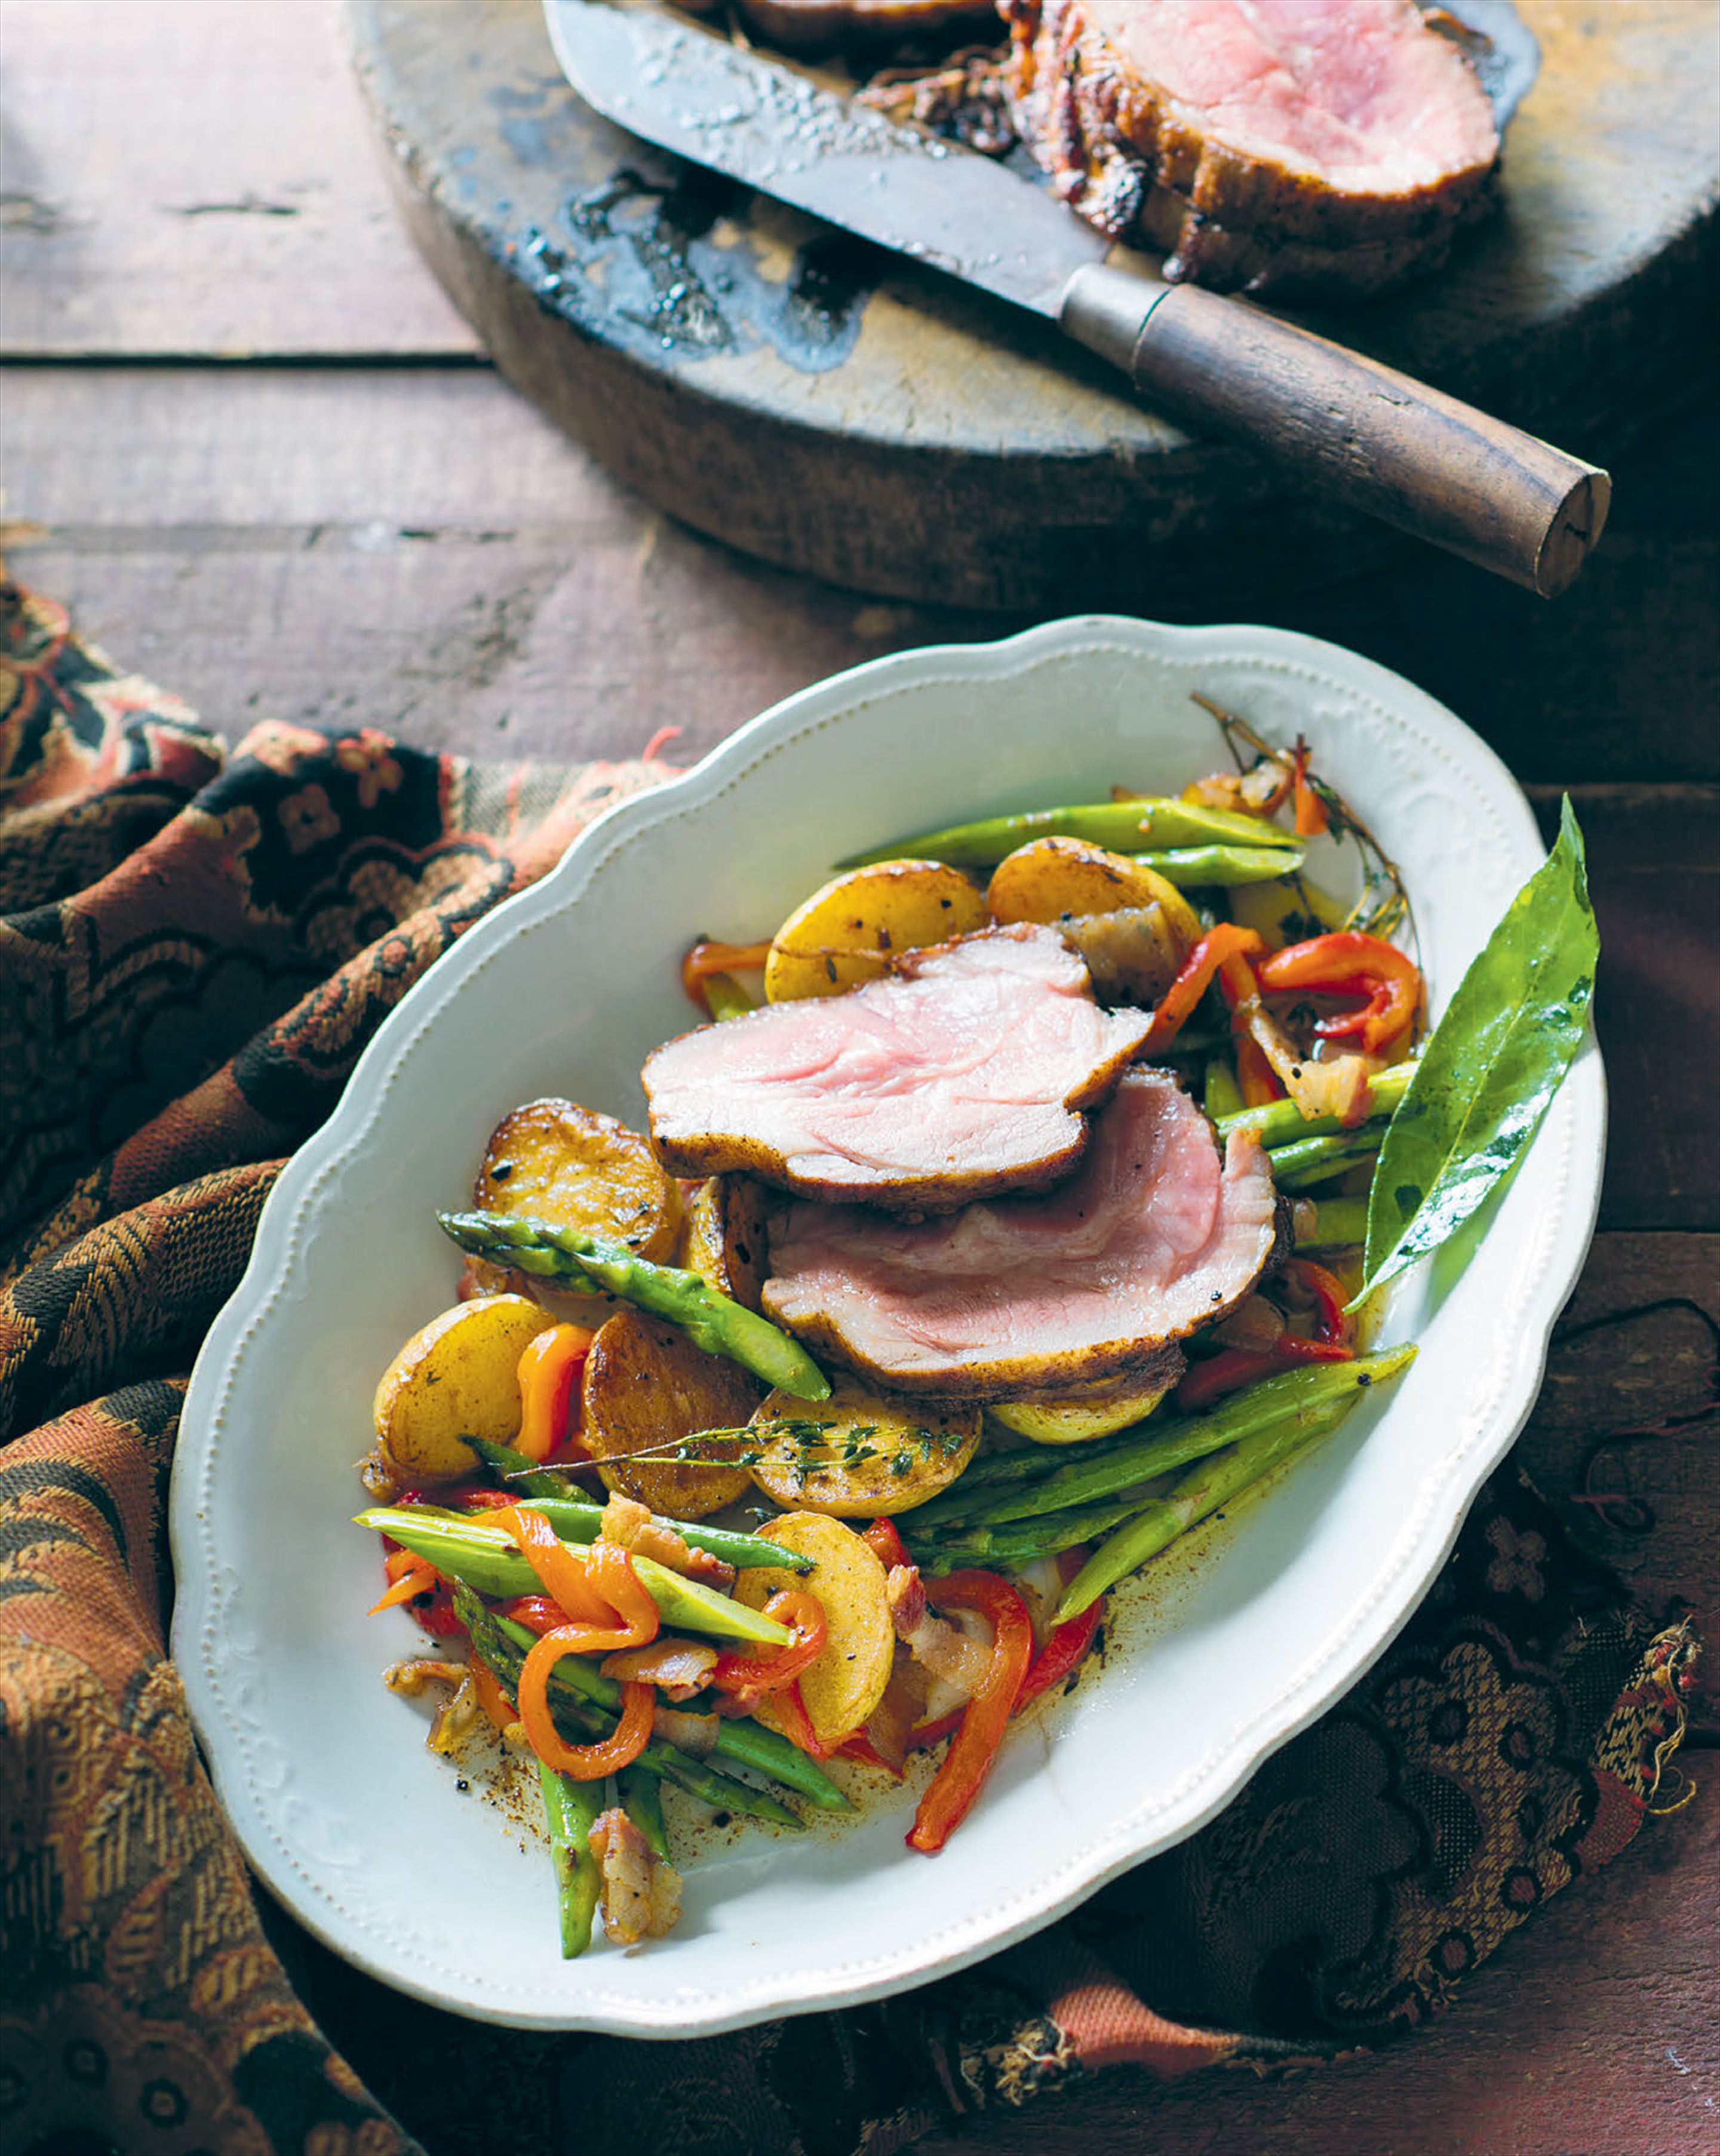 Pork neck with basque vegetables